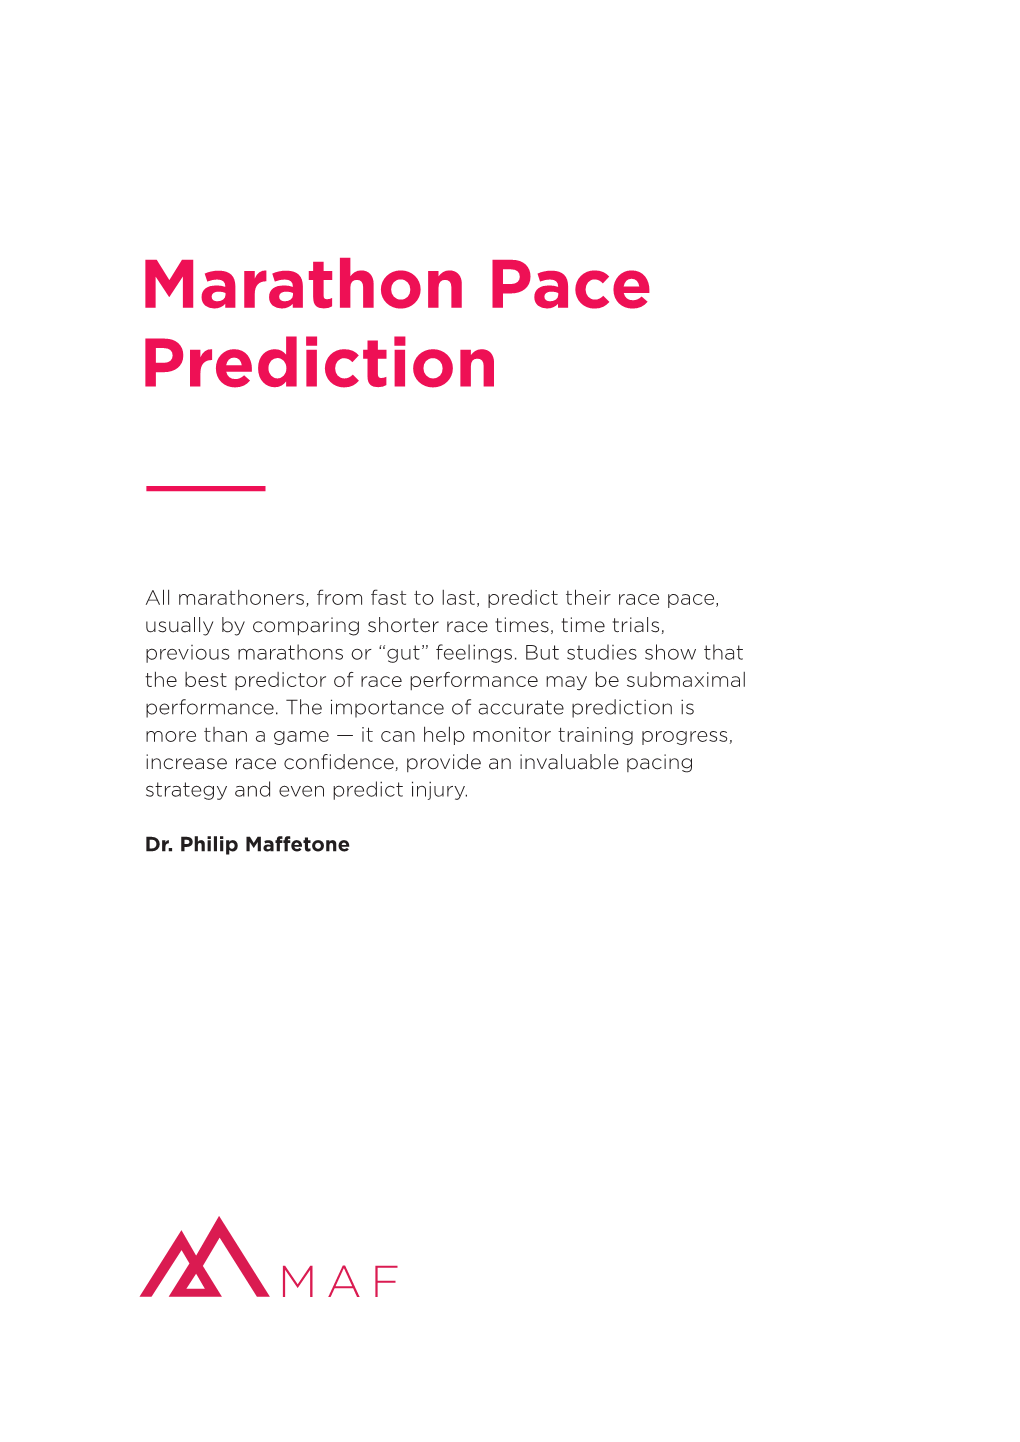 Marathon Pace Prediction